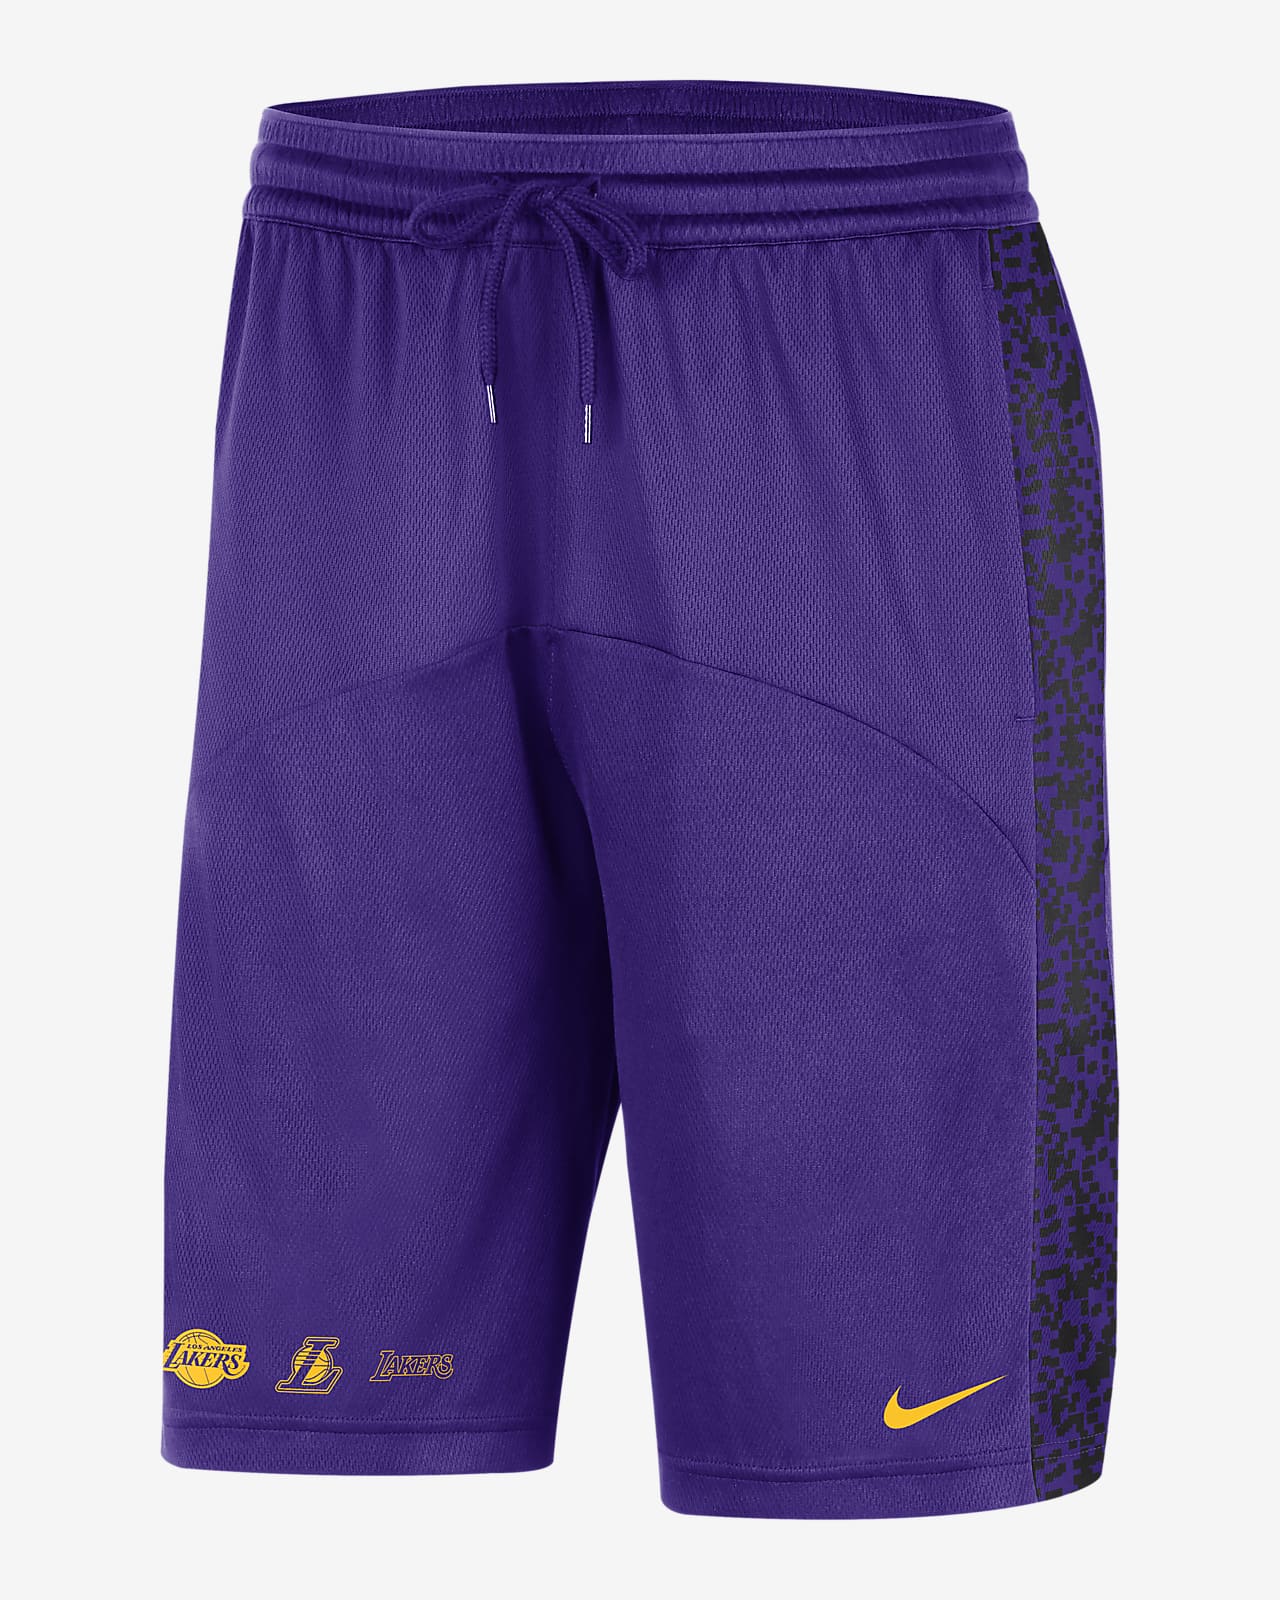 Shorts con gráfico de la NBA Nike Dri-FIT para hombre Los Angeles Lakers Starting 5 Courtside